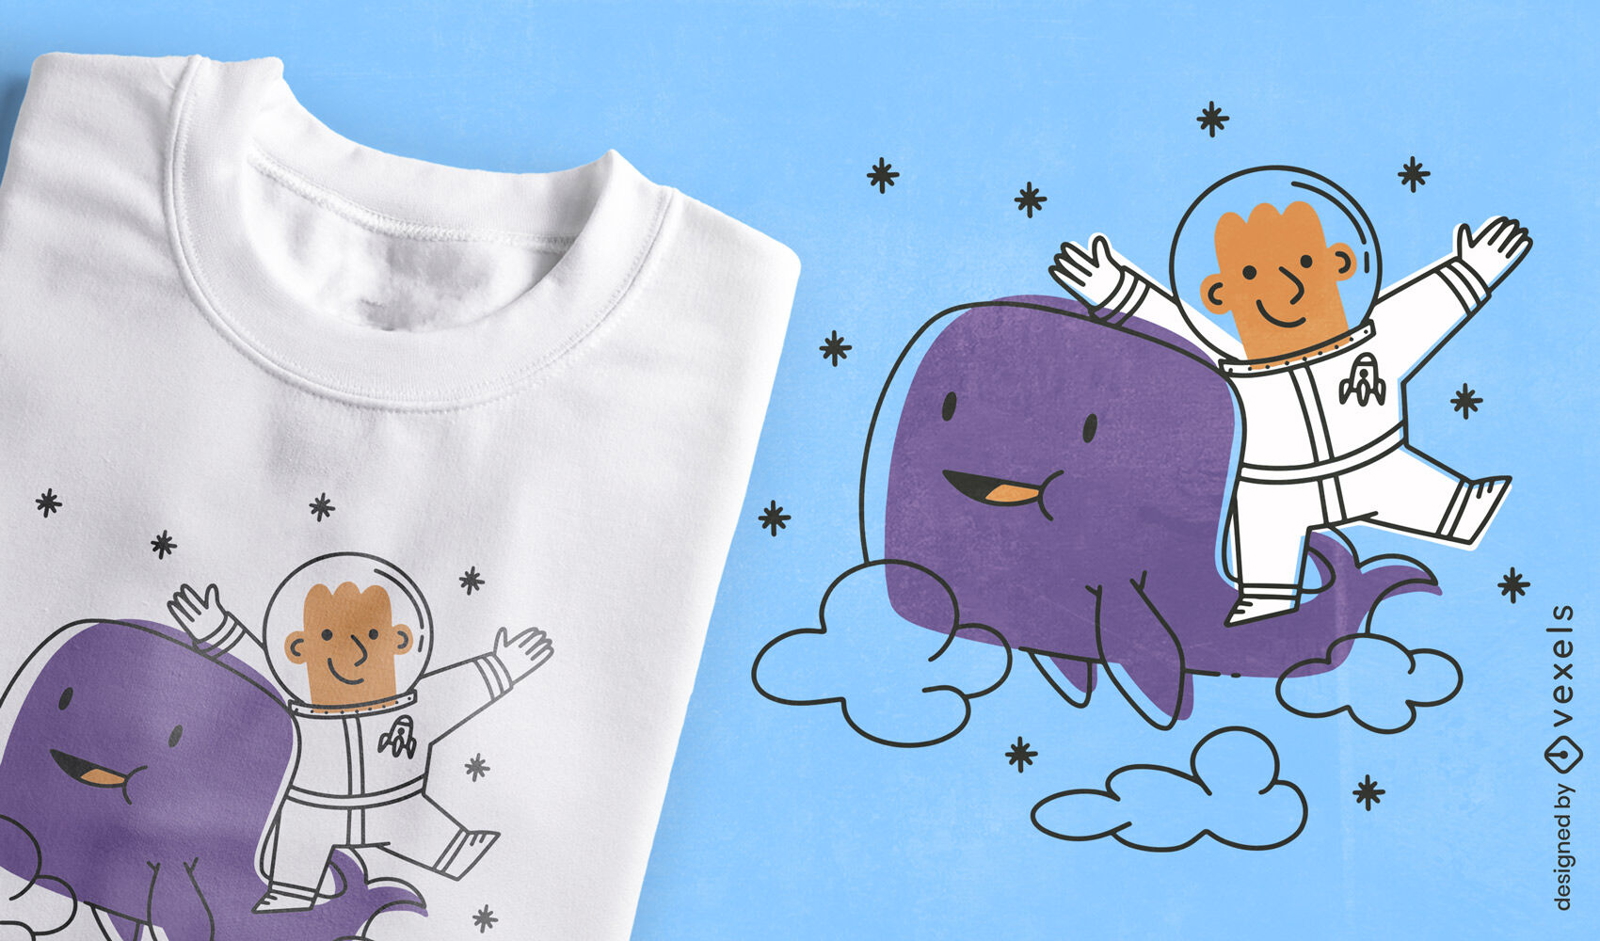 Dise?o de camiseta de astronauta y ballena.